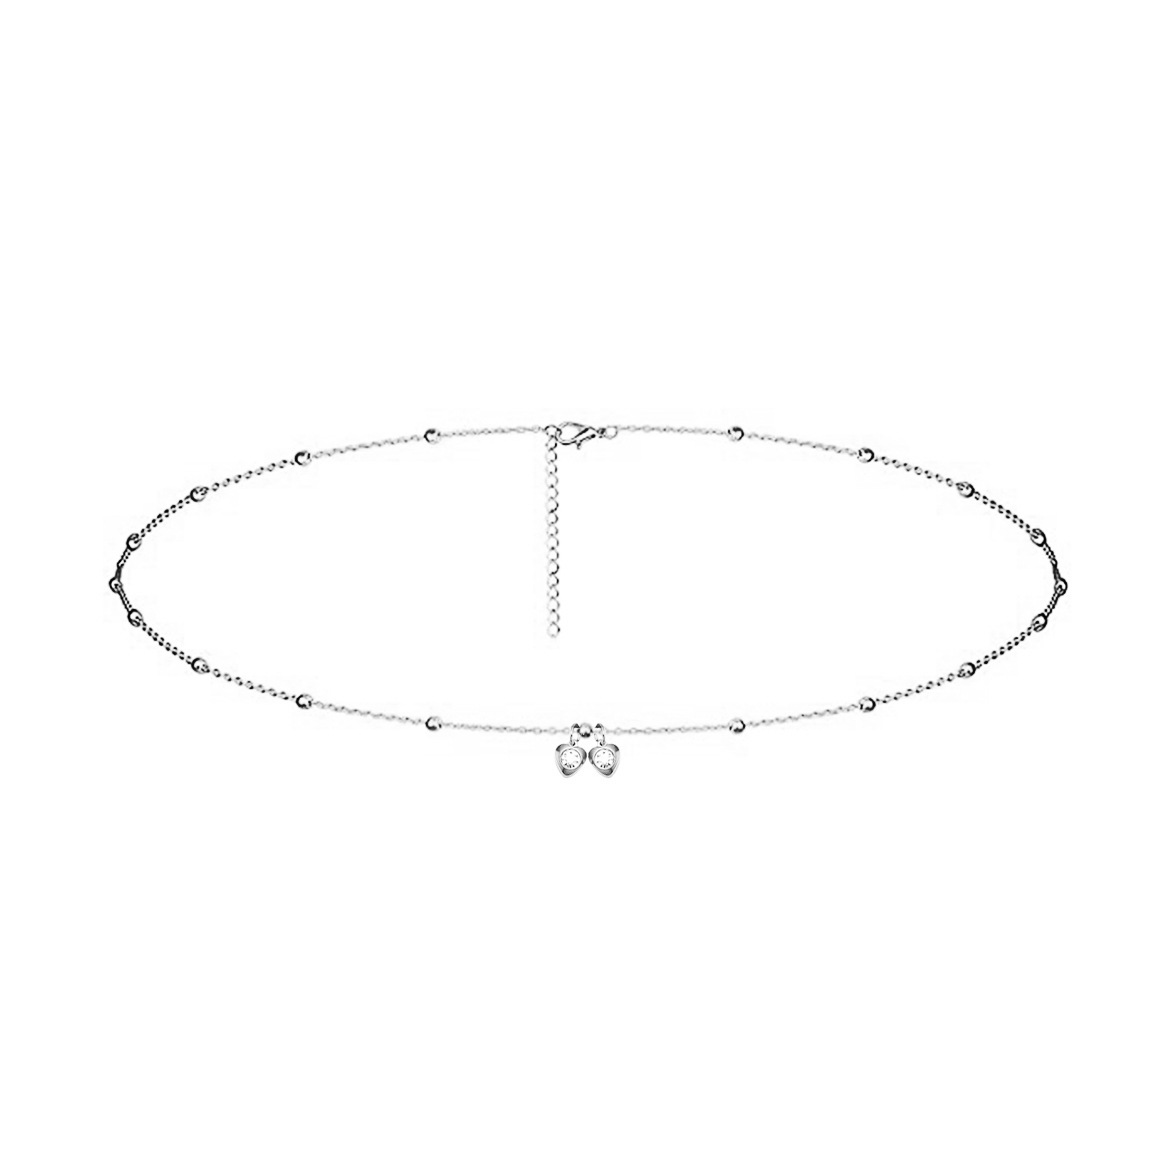 ALAD197-01-bead chain silver